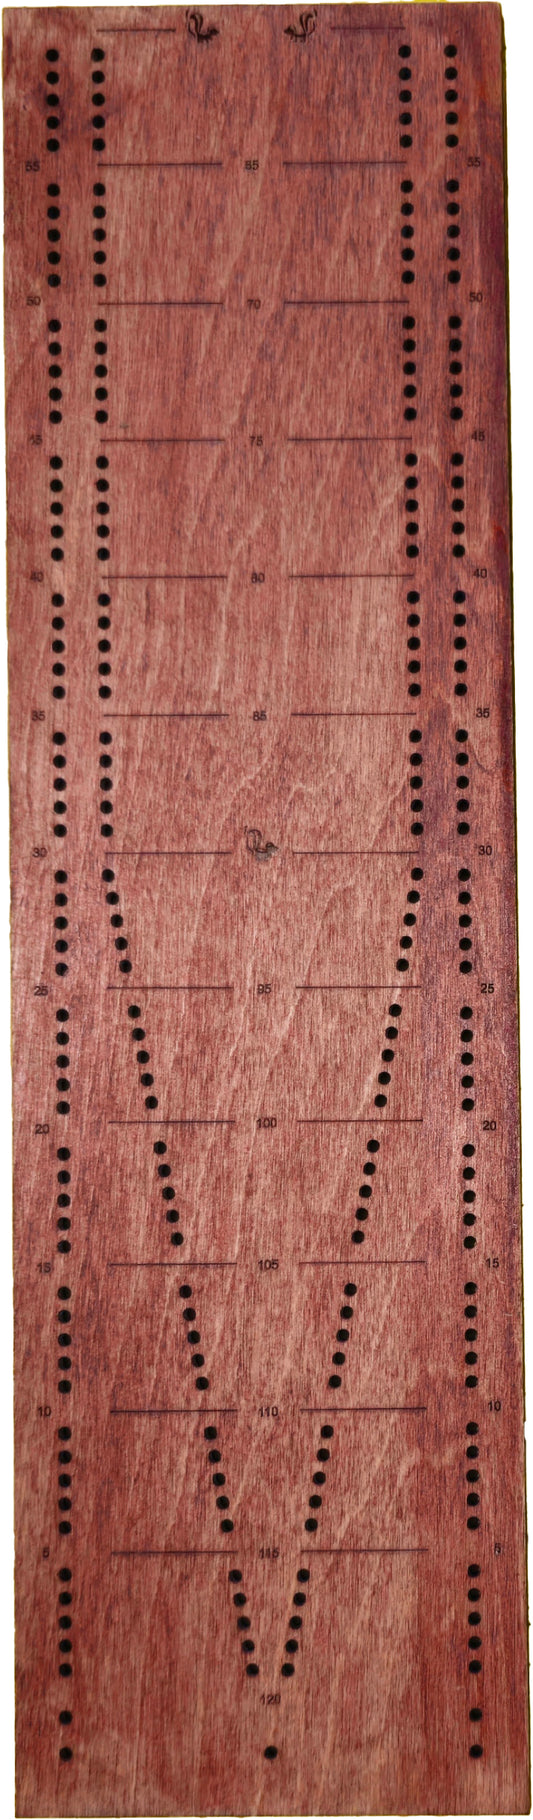 Tournament Cribbage Board